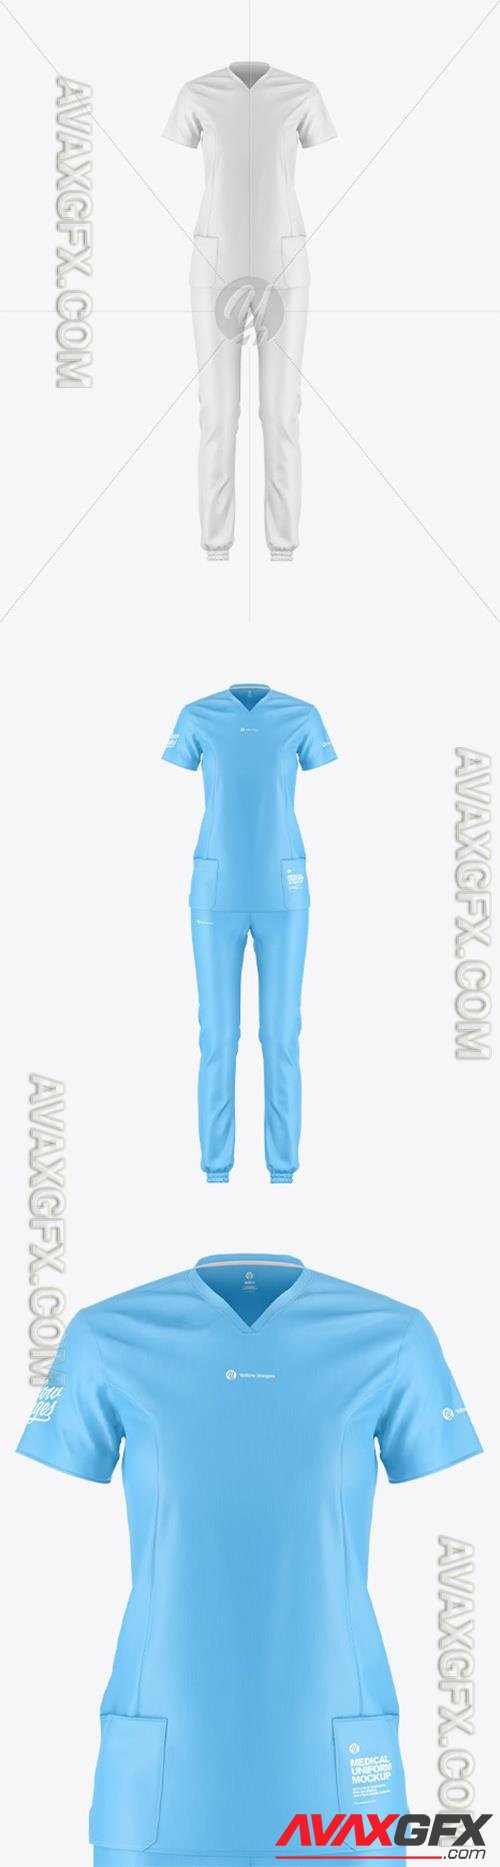 Women's Medical Uniform Mockup - Front View 92777